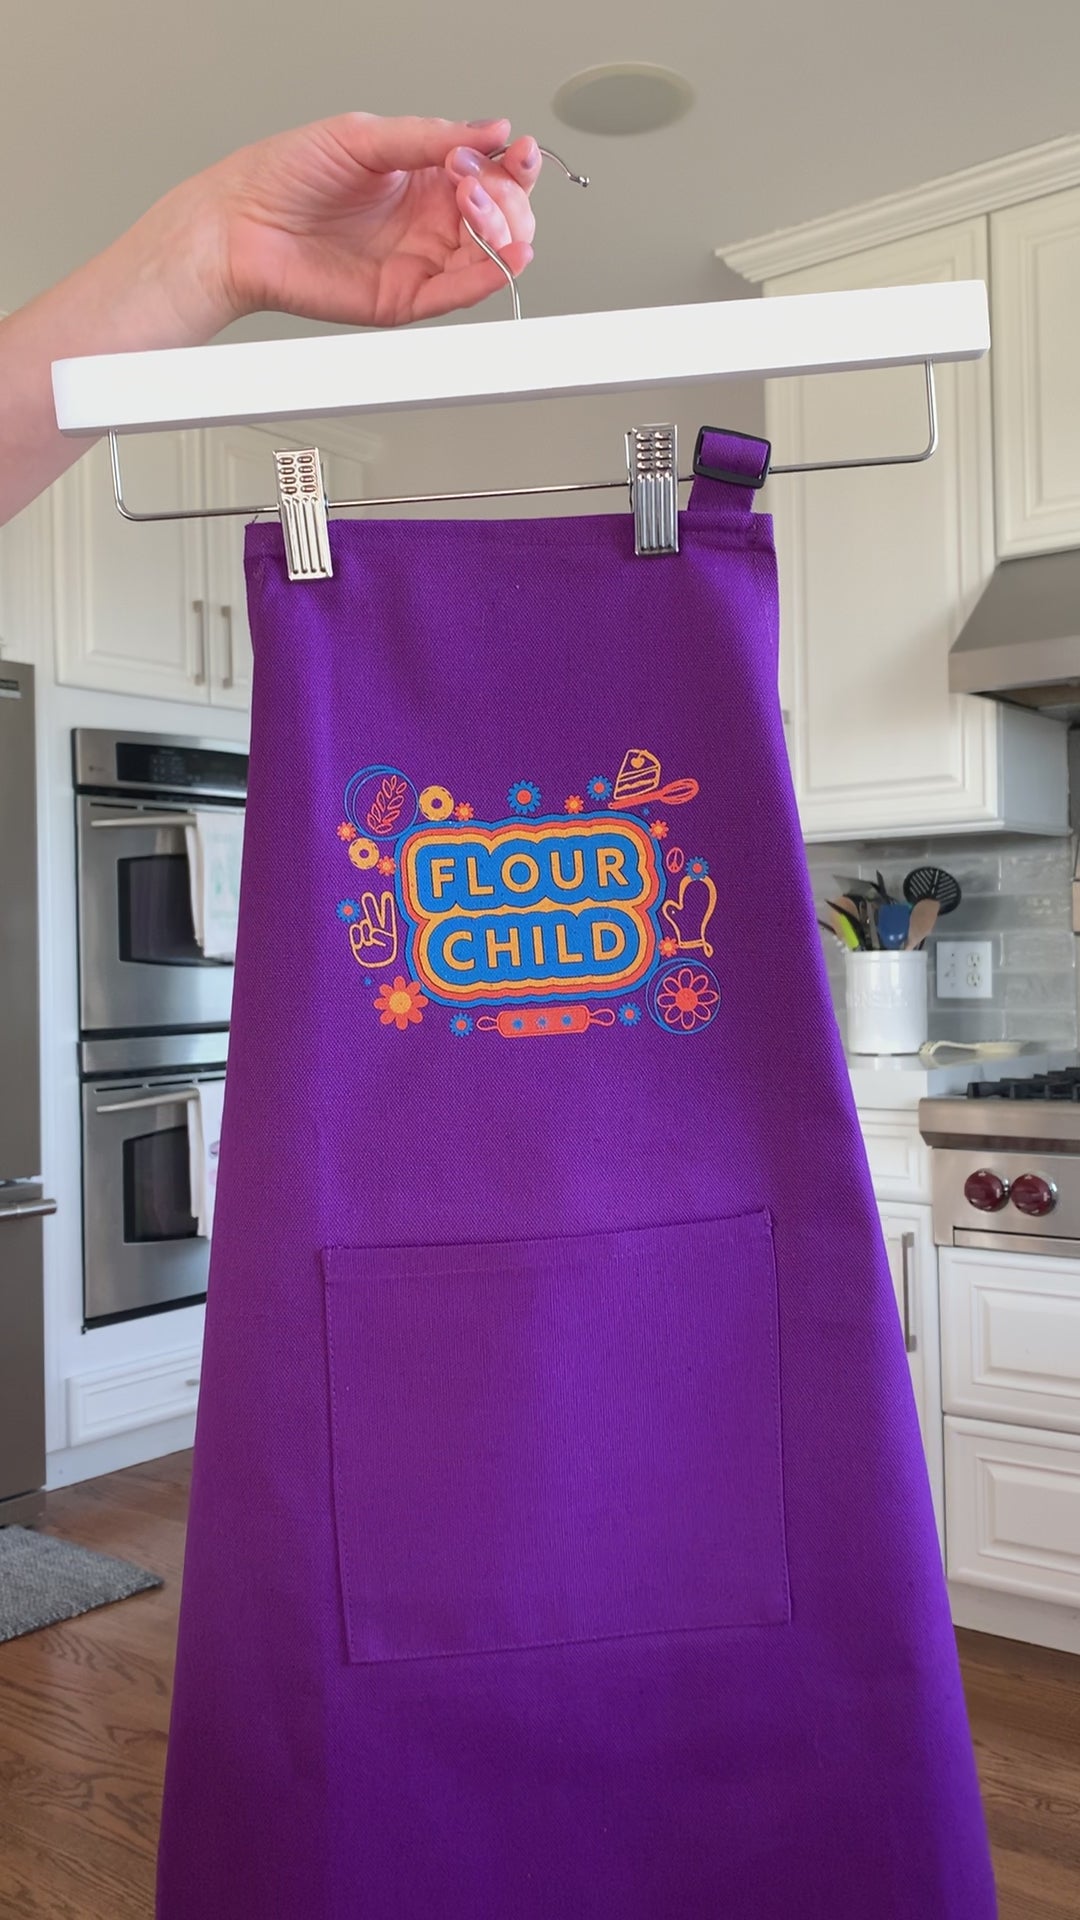 A purple kid's apron that reads "Flour Child" hangs on a hanger